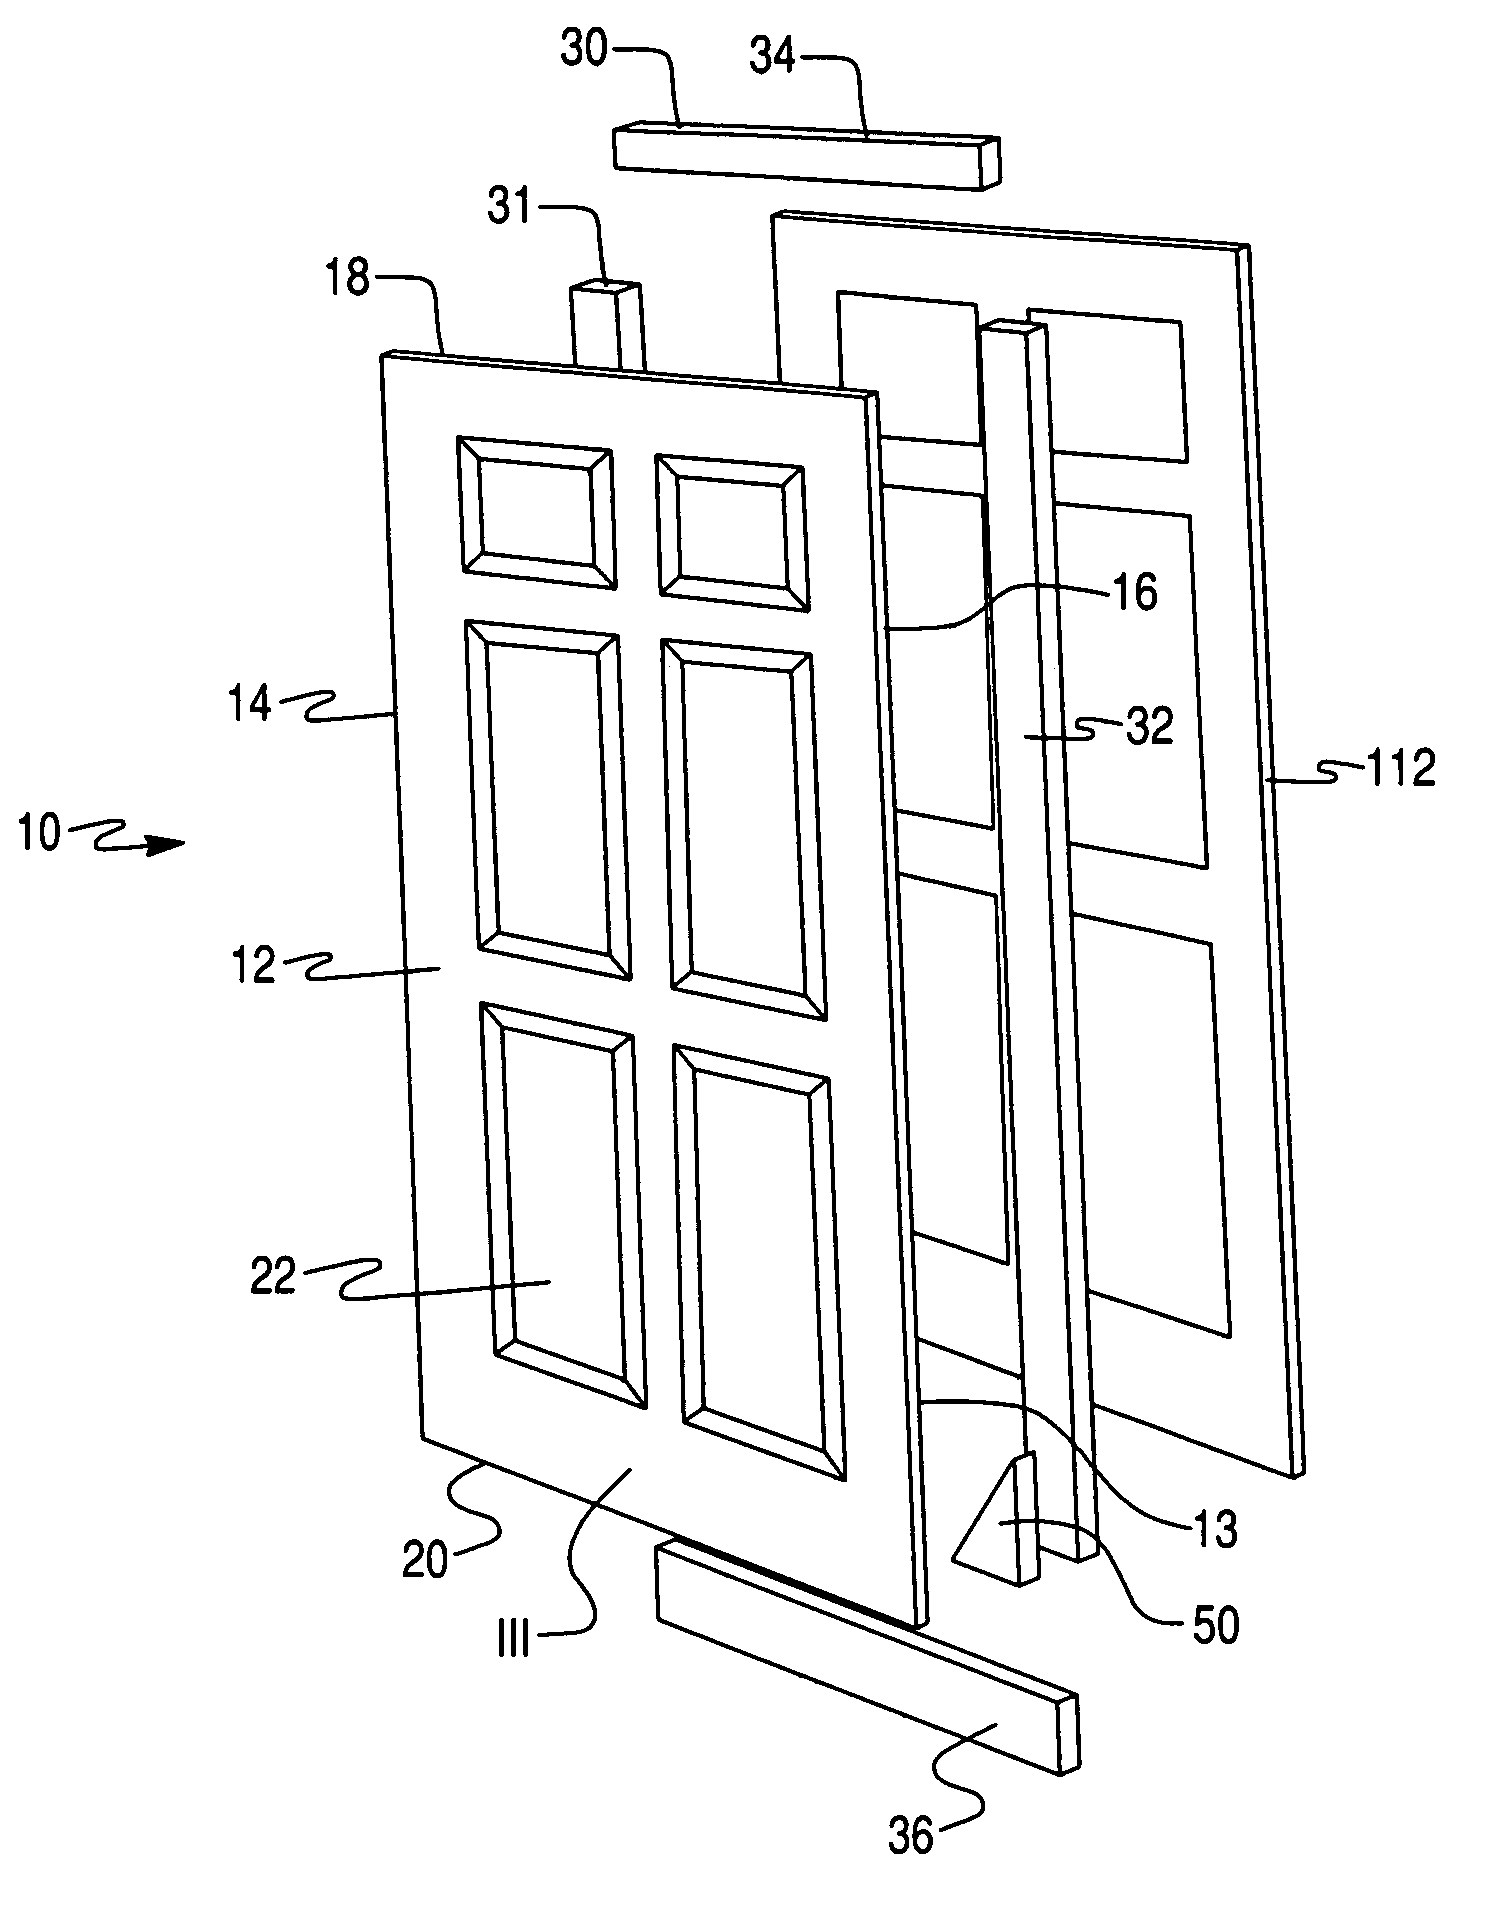 Composite door structure and method of forming a composite door structure